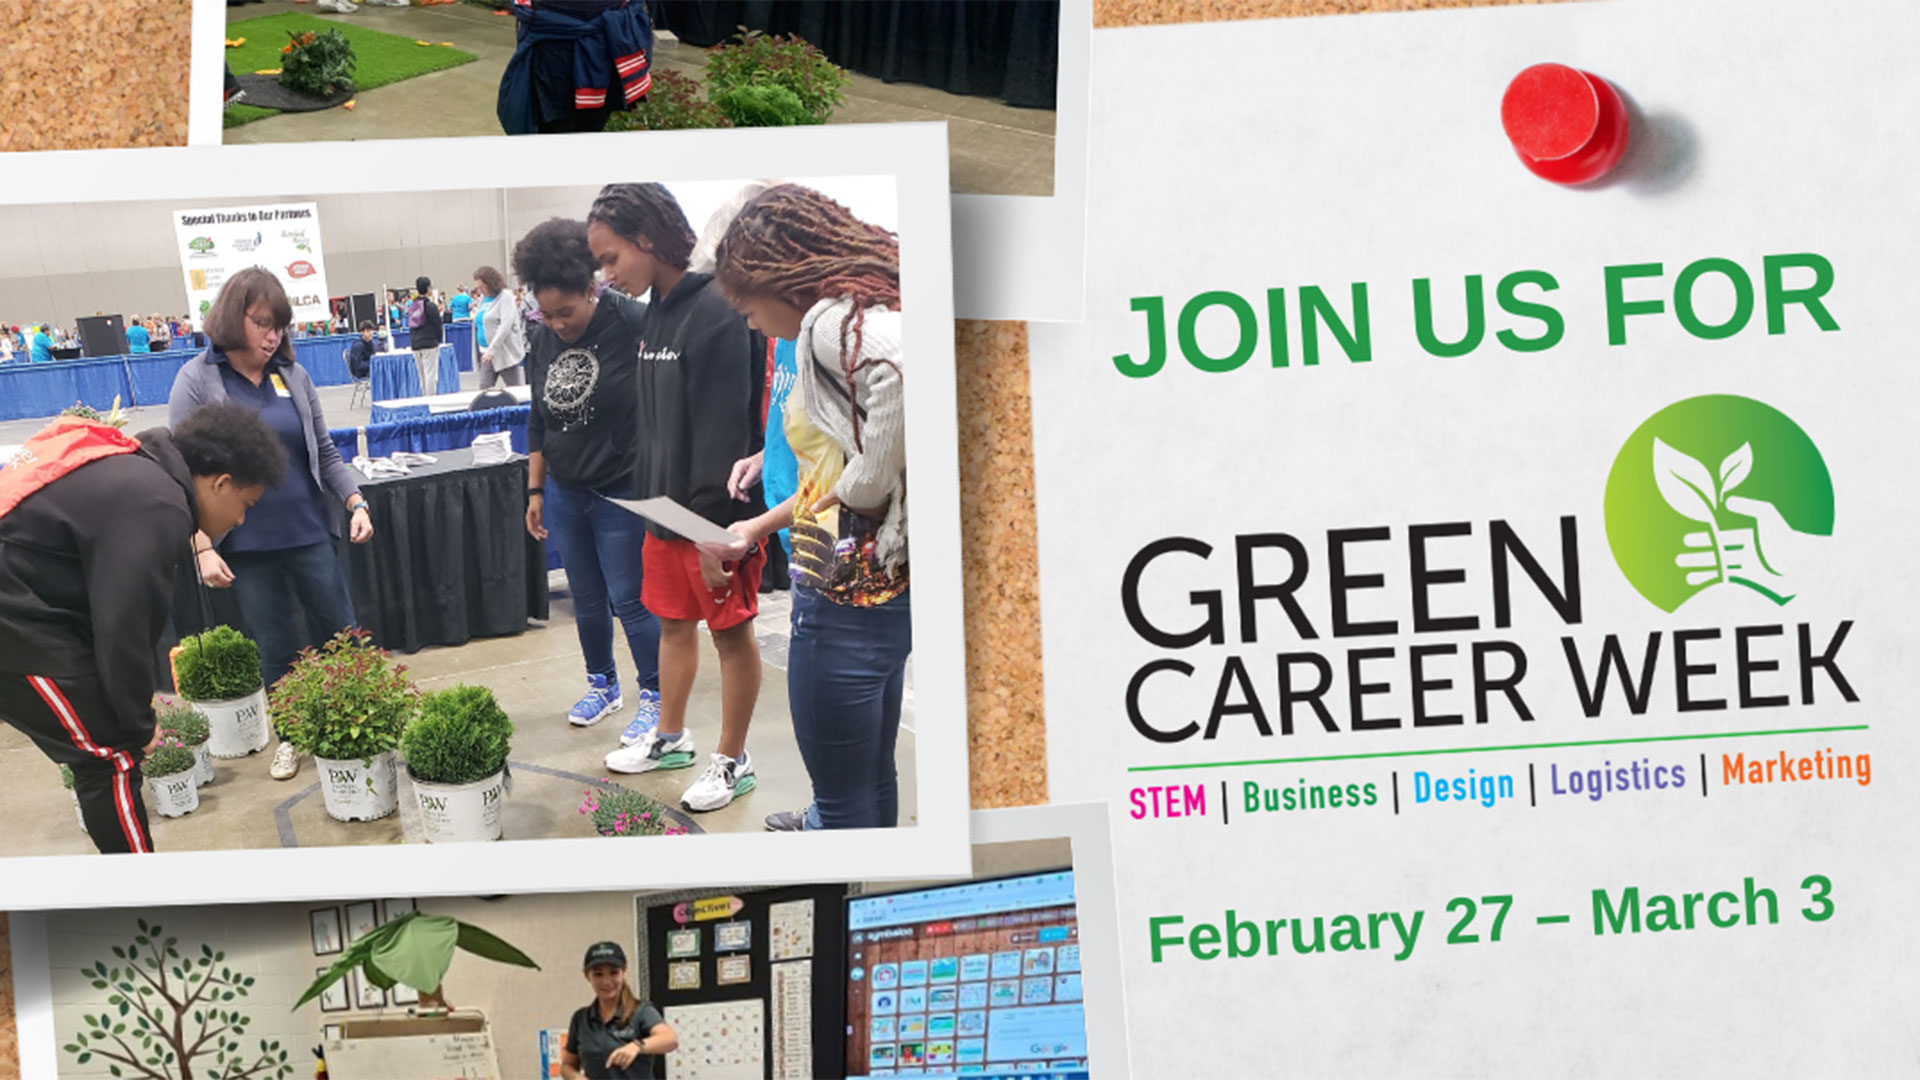 Green Career Week is Feb. 27 to March 3.